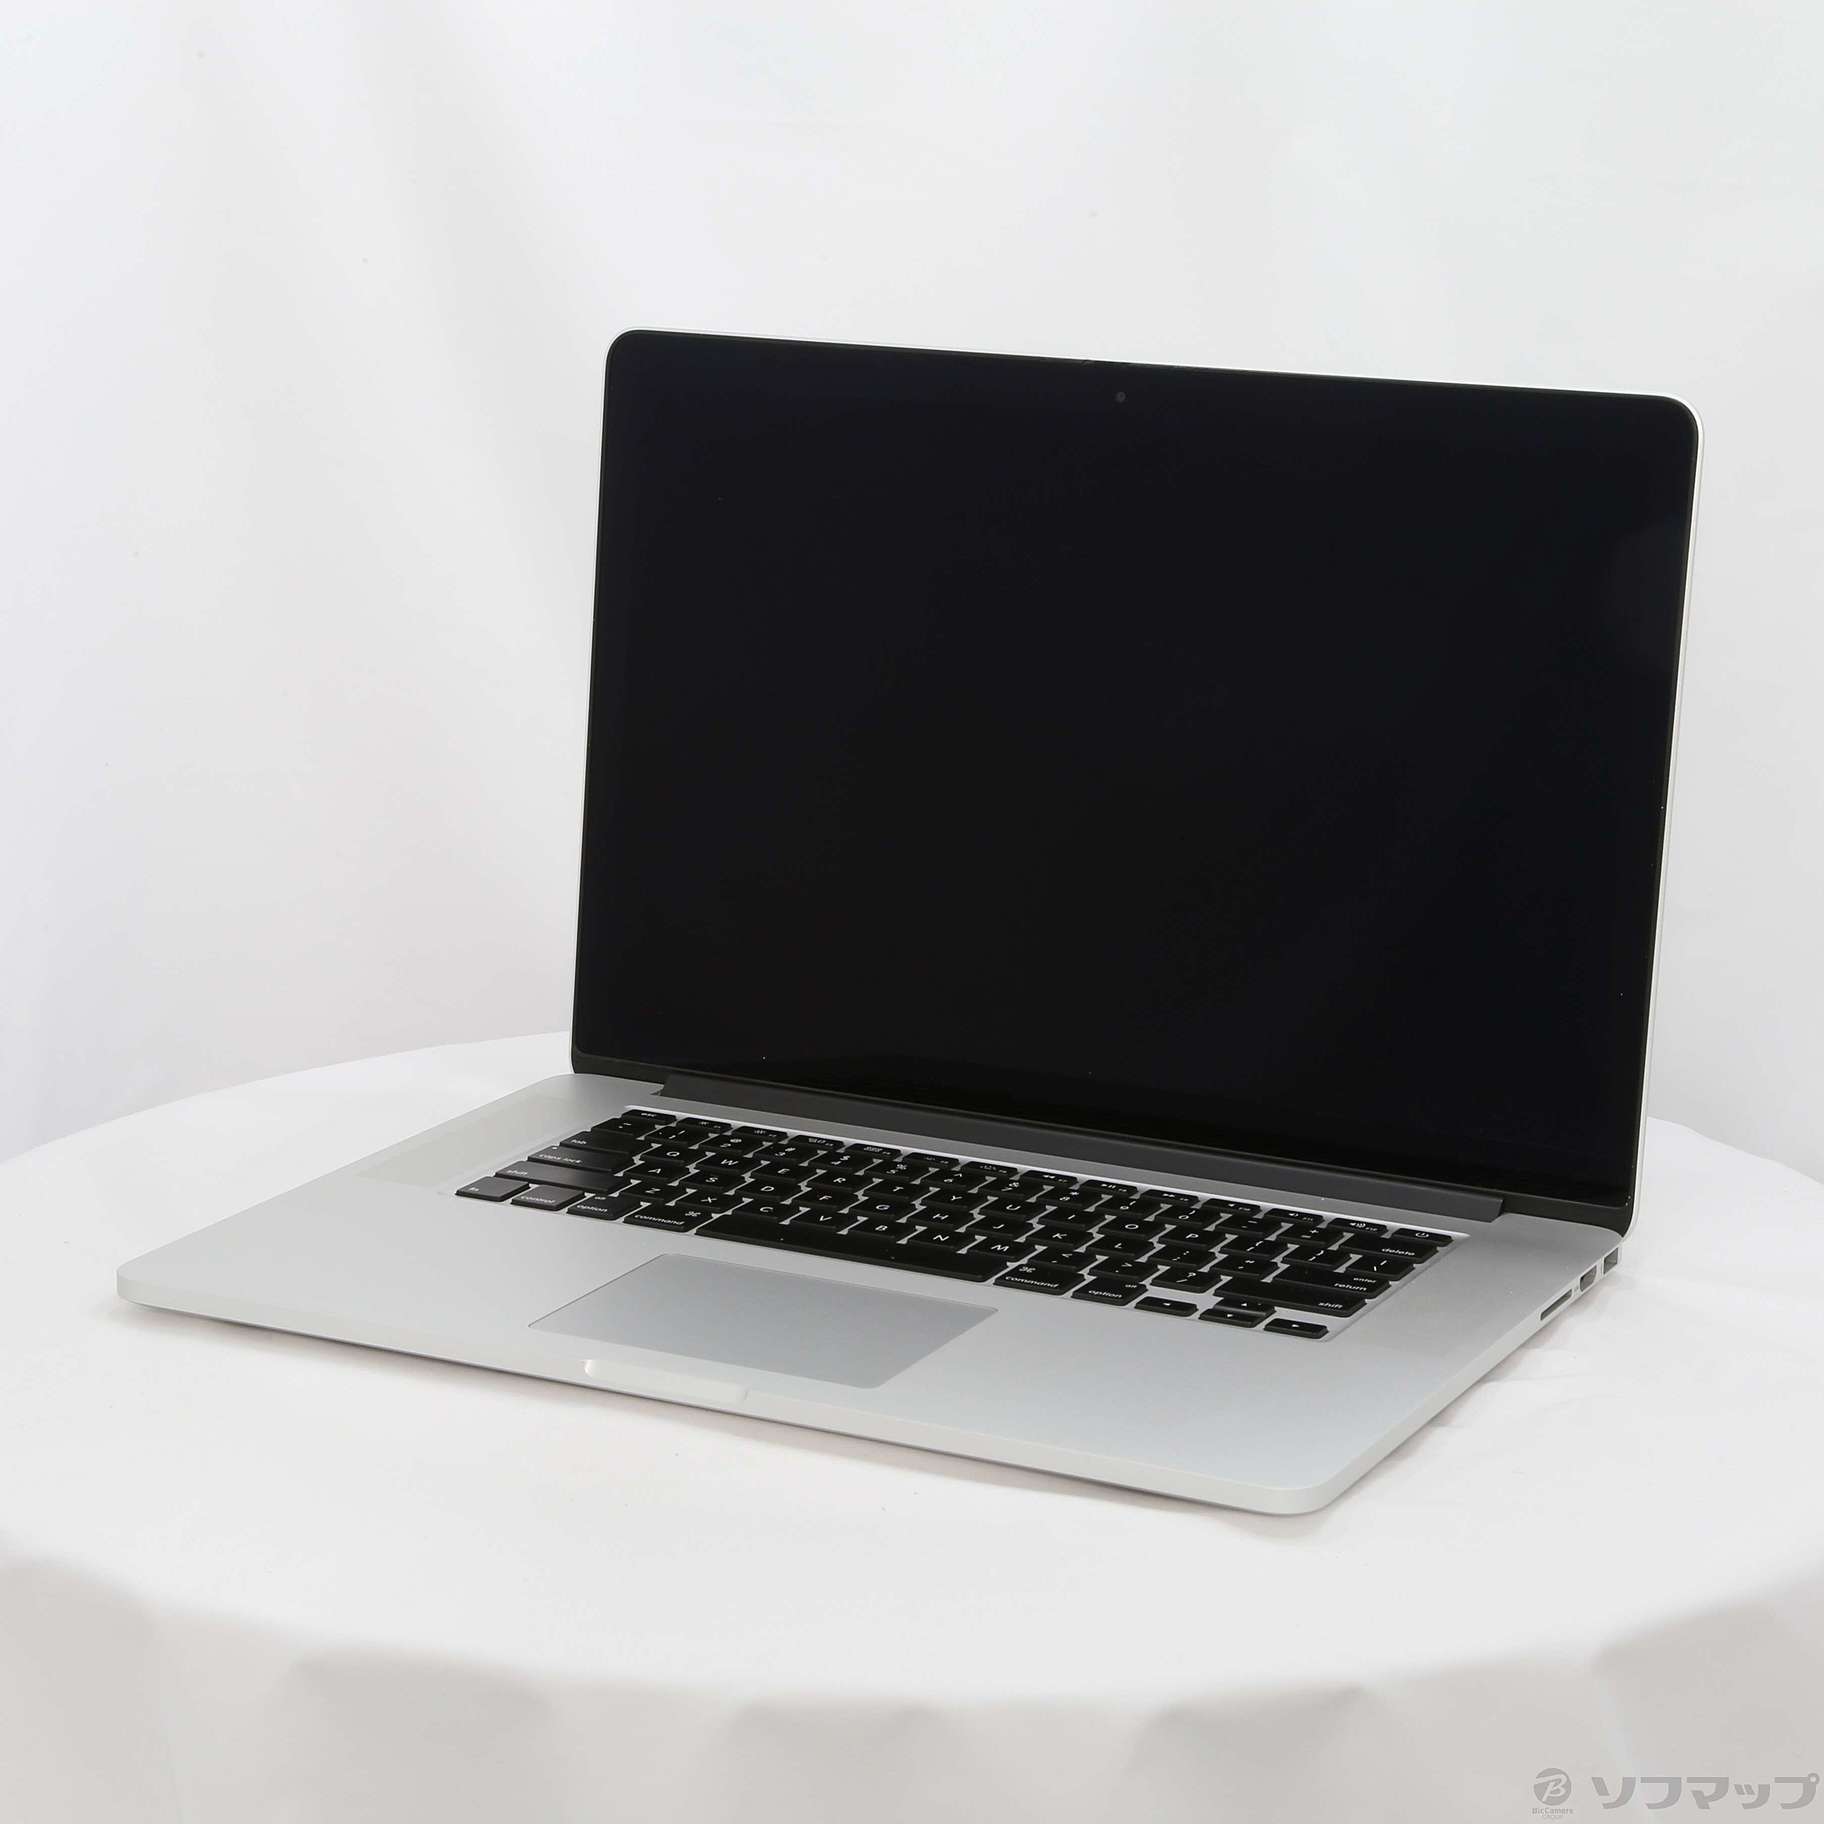 中古】セール対象品 MacBook Pro 15-inch Mid 2012 MC976J／A Core_i7